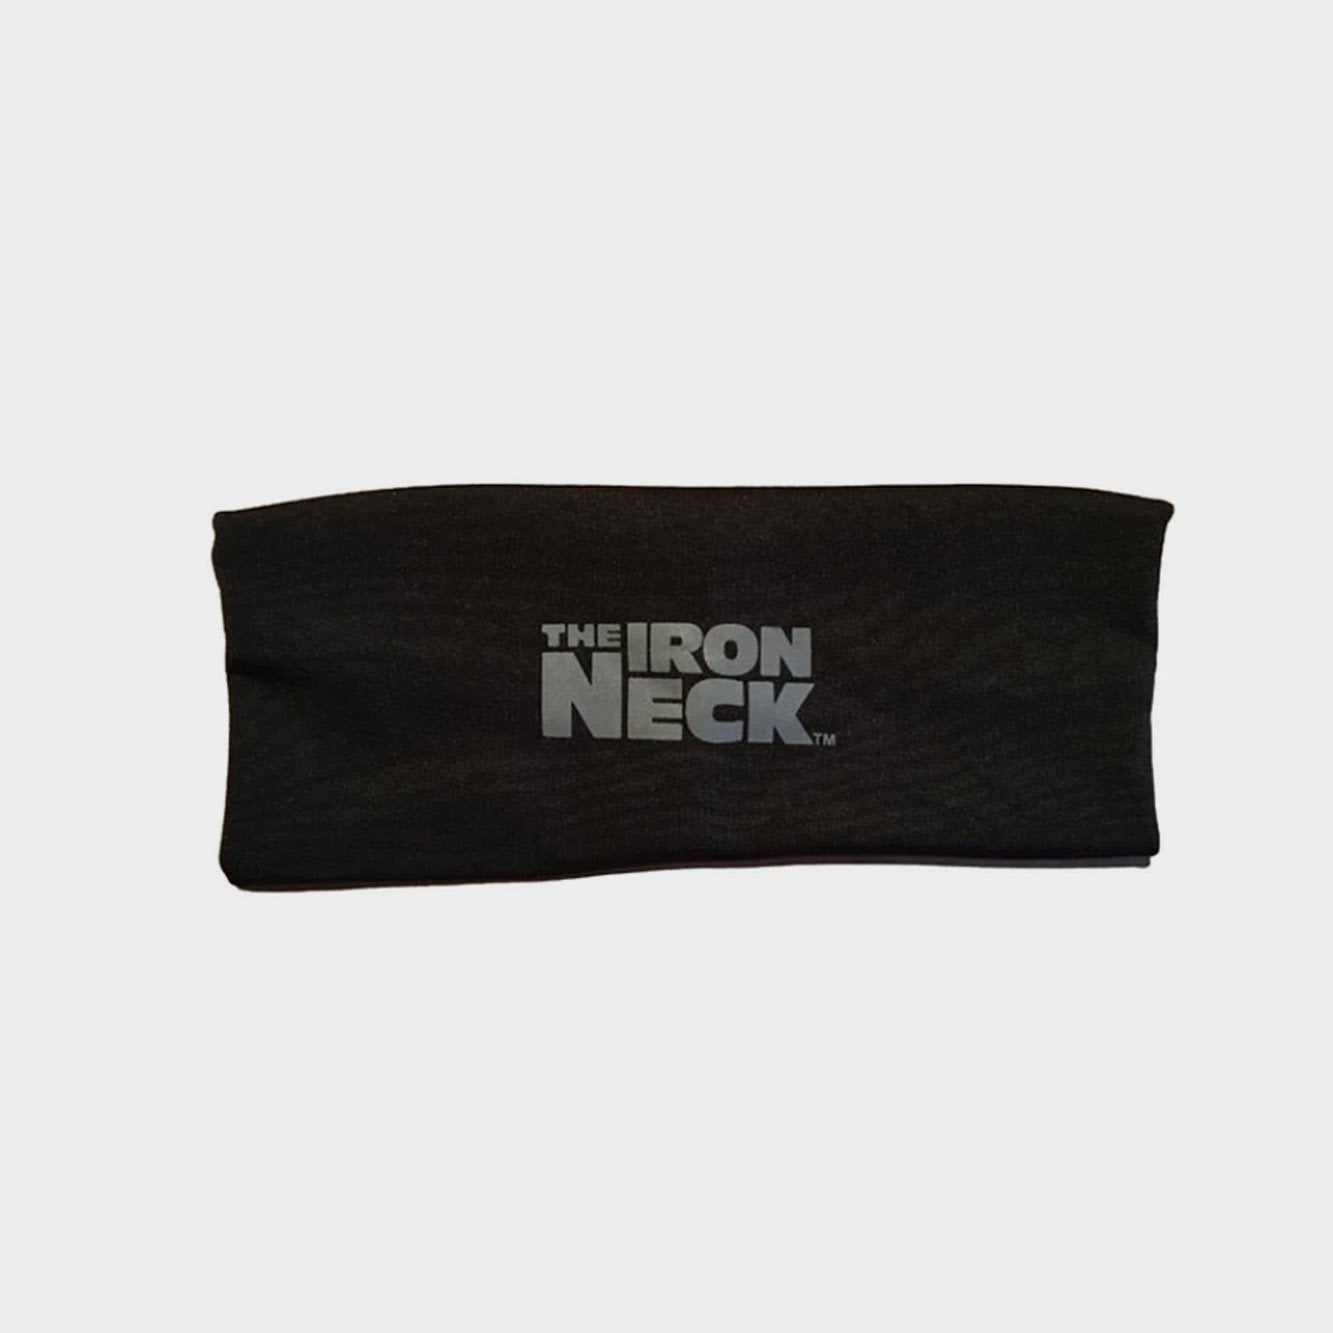 Retro Iron Neck Headband Apparel Iron Neck   